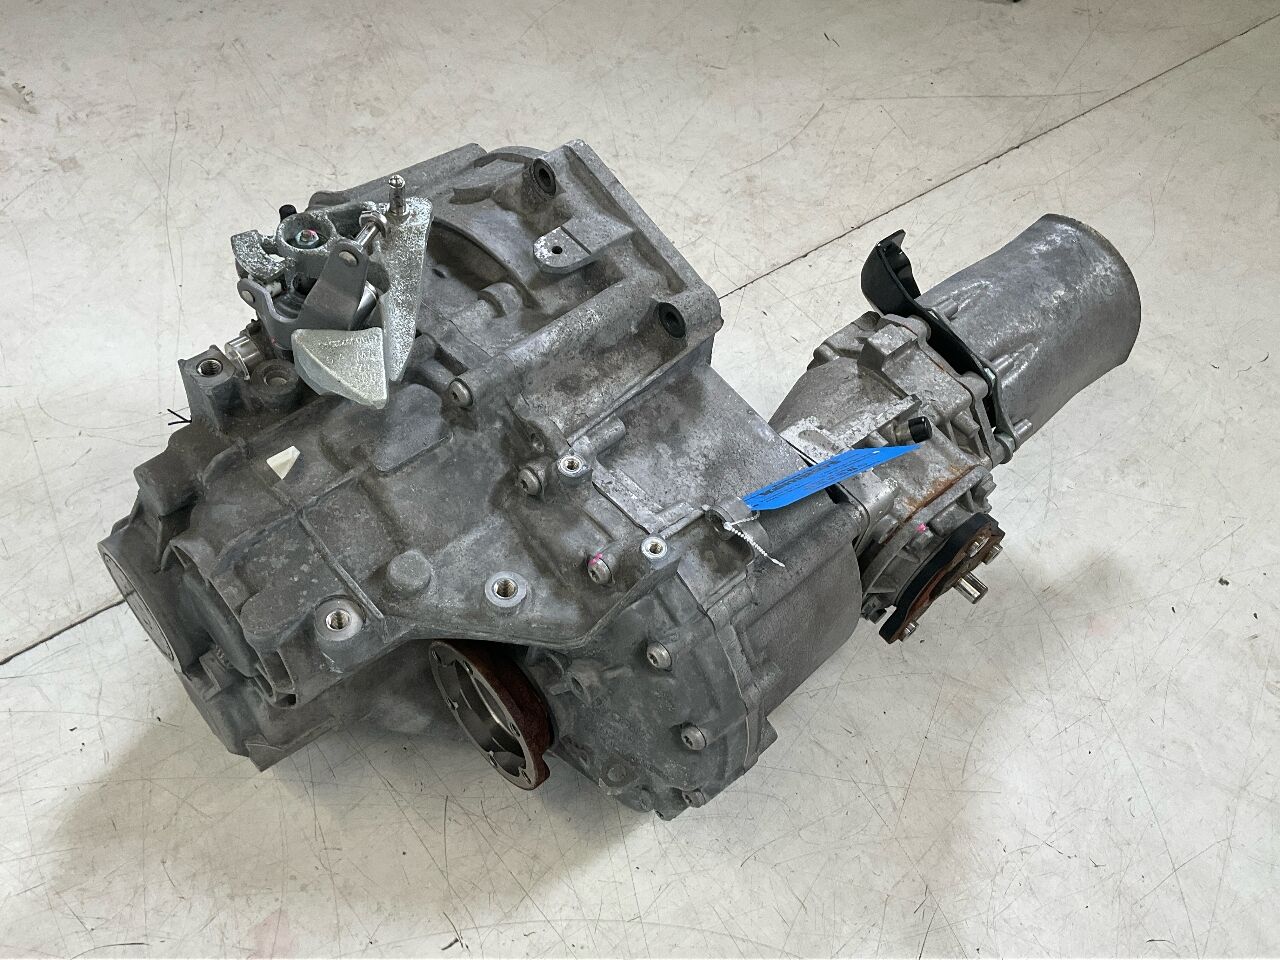 Manual gearbox AUDI A3 Sportback (8P) 2.0 TFSI quattro S3  195 kW  265 PS (06.2008-03.2013)